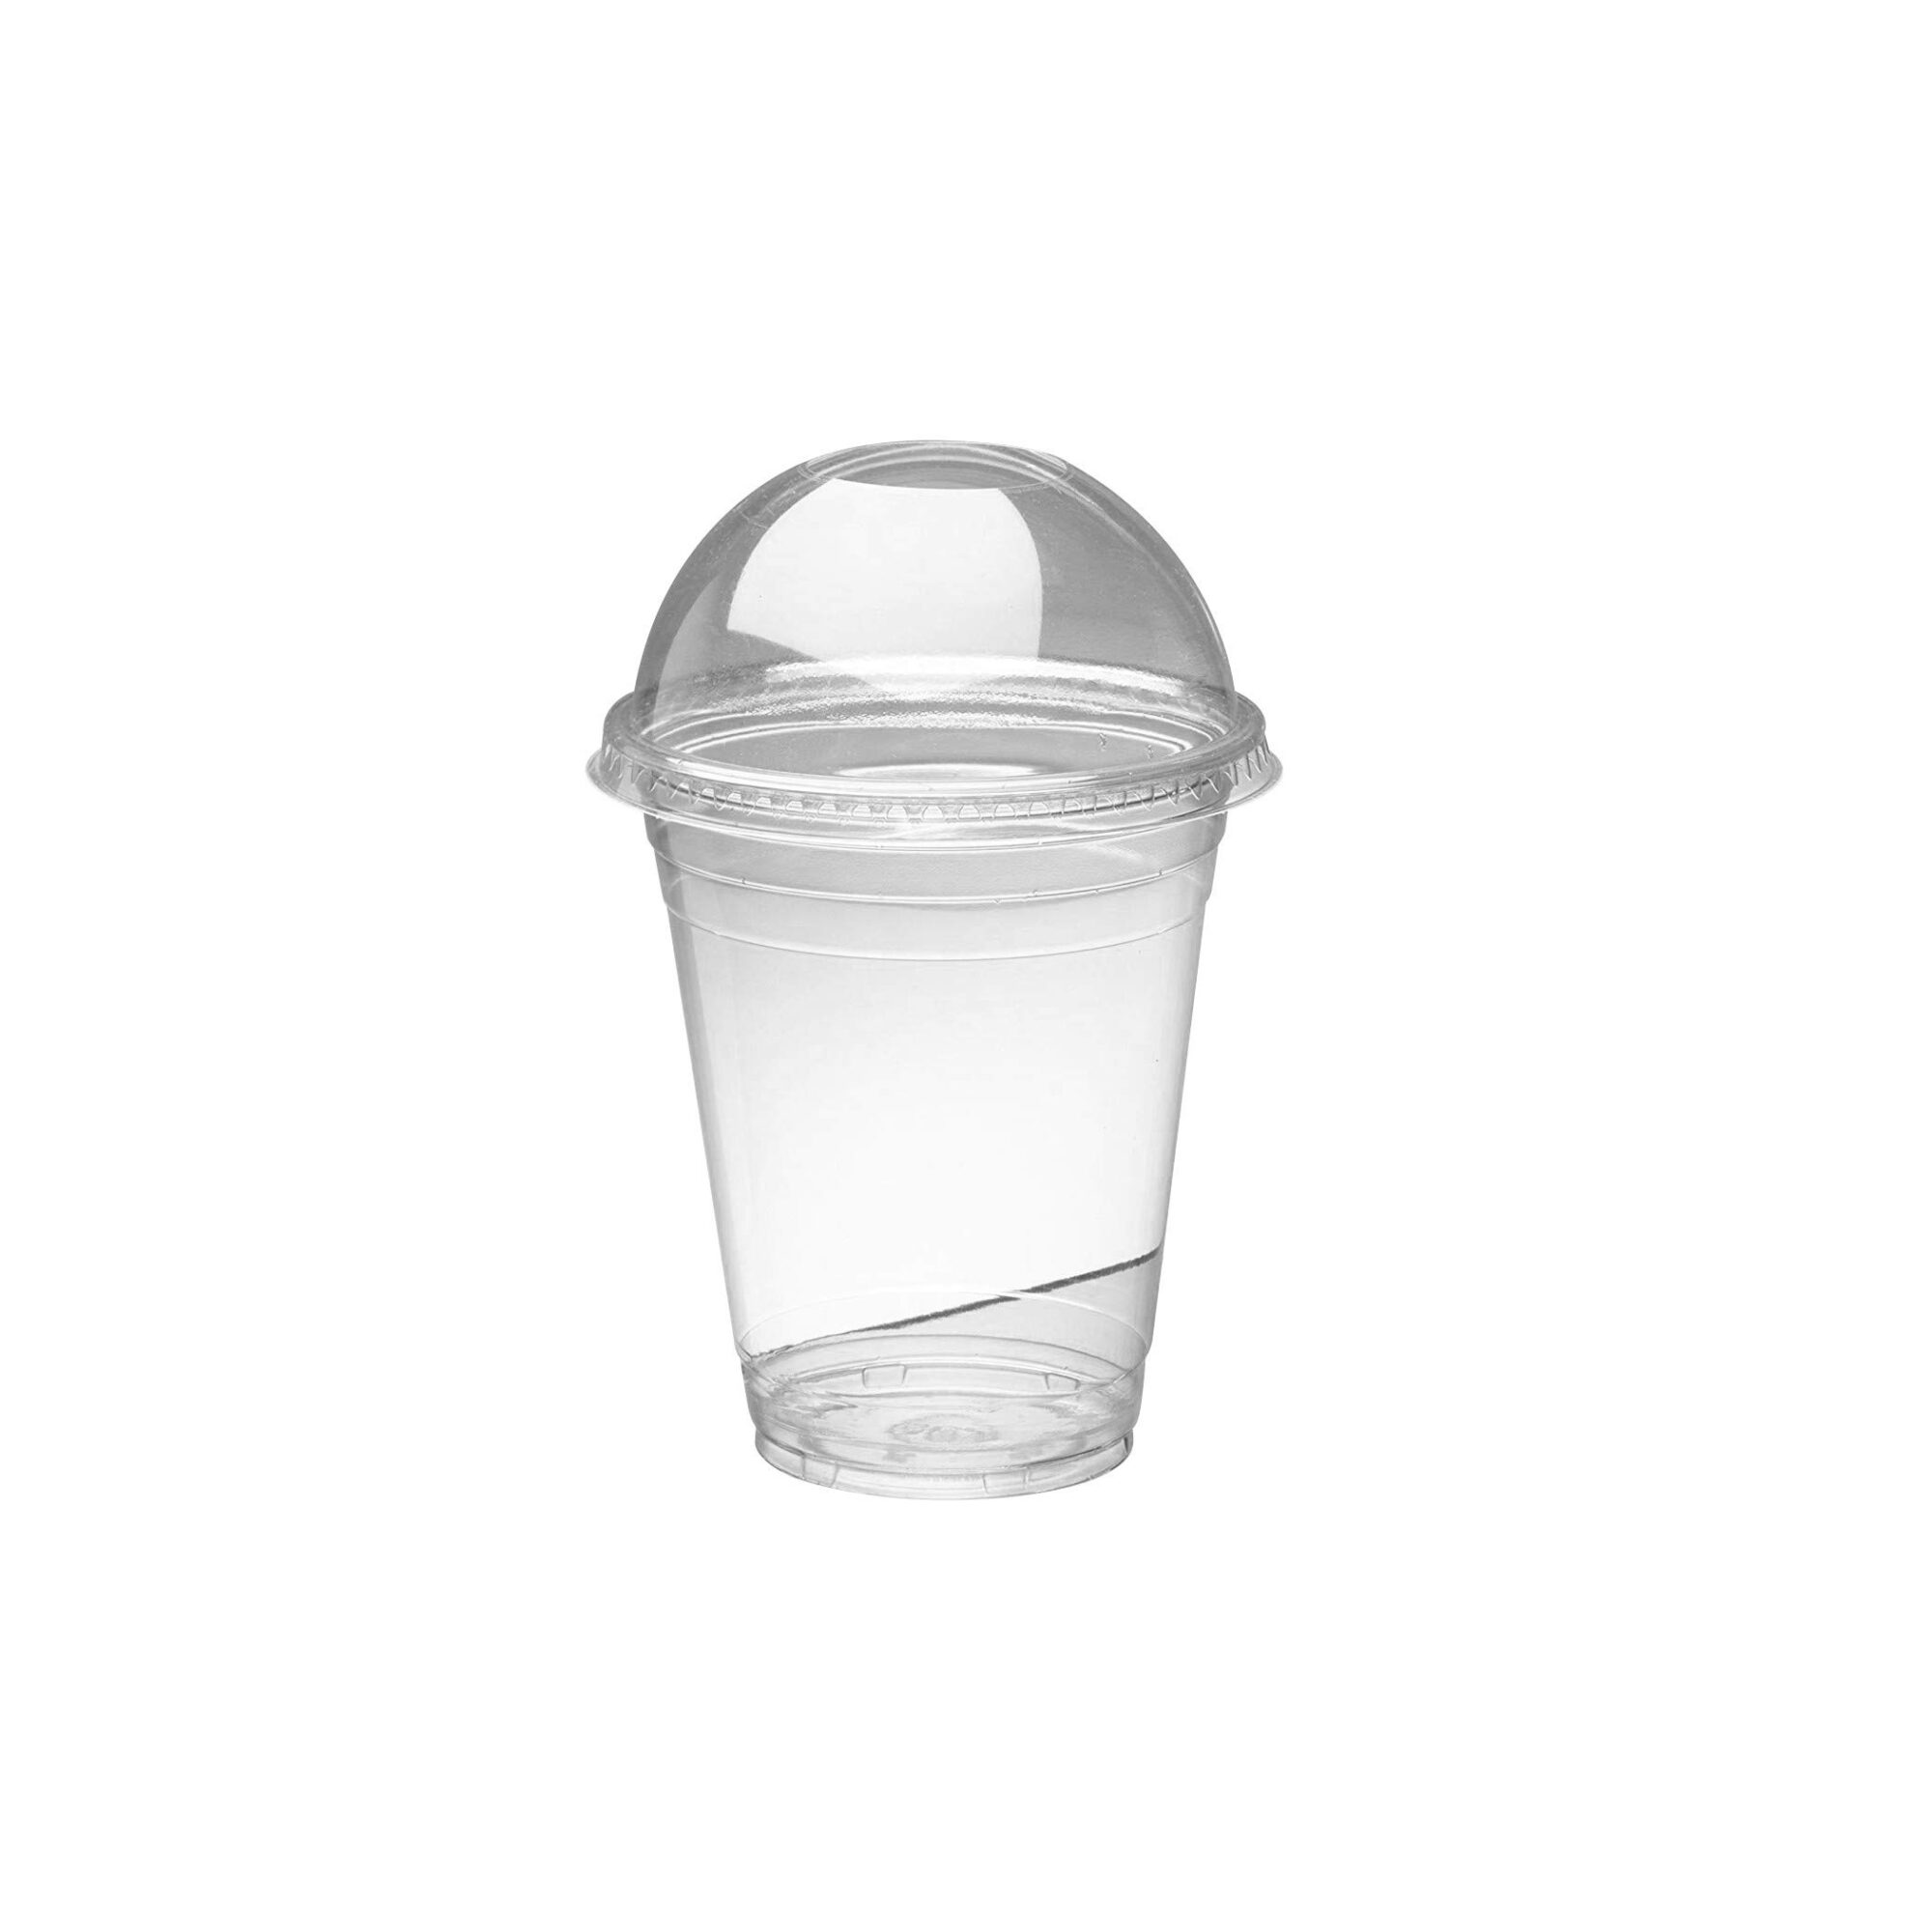 UNIQIFY 16/20/24 oz Clear Dome Plastic Cup Lids